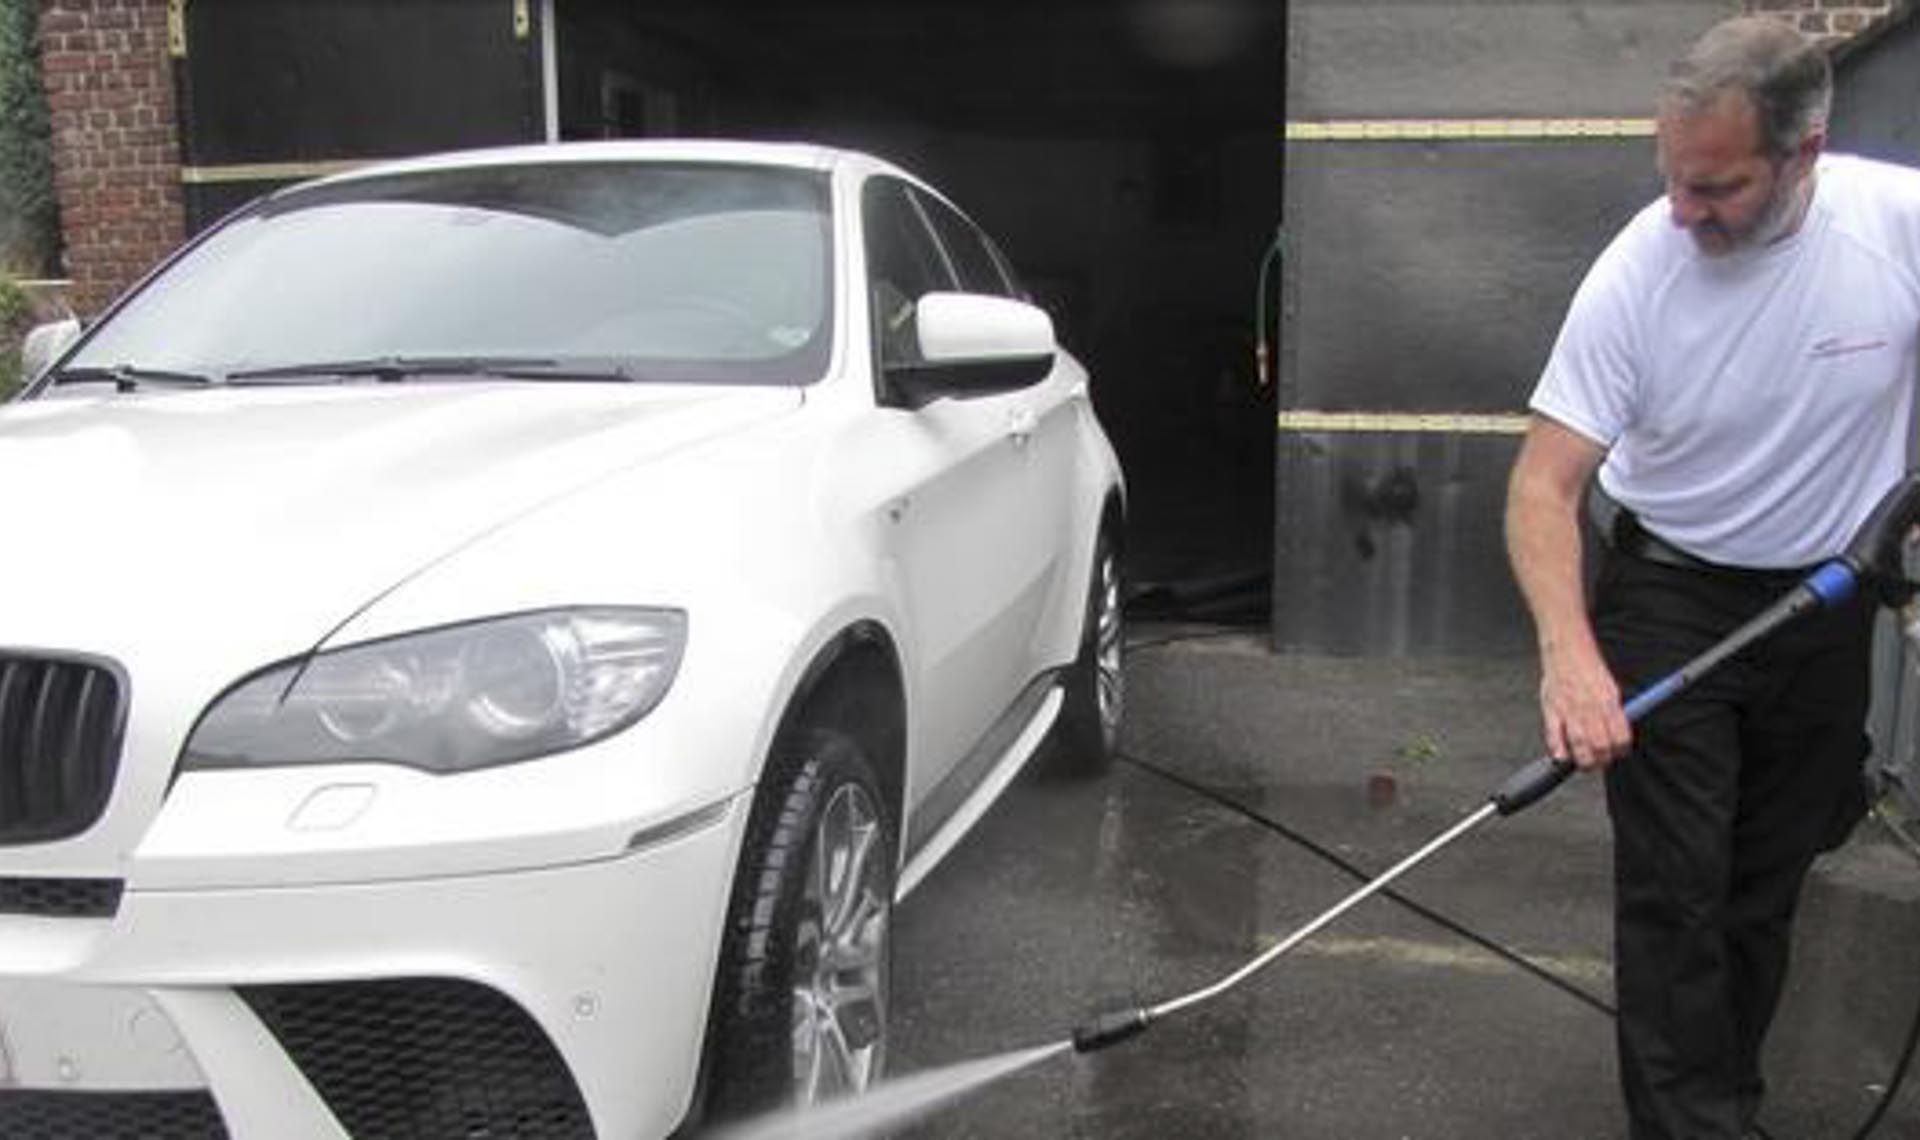 Automorphose Car wash detailing charleroi